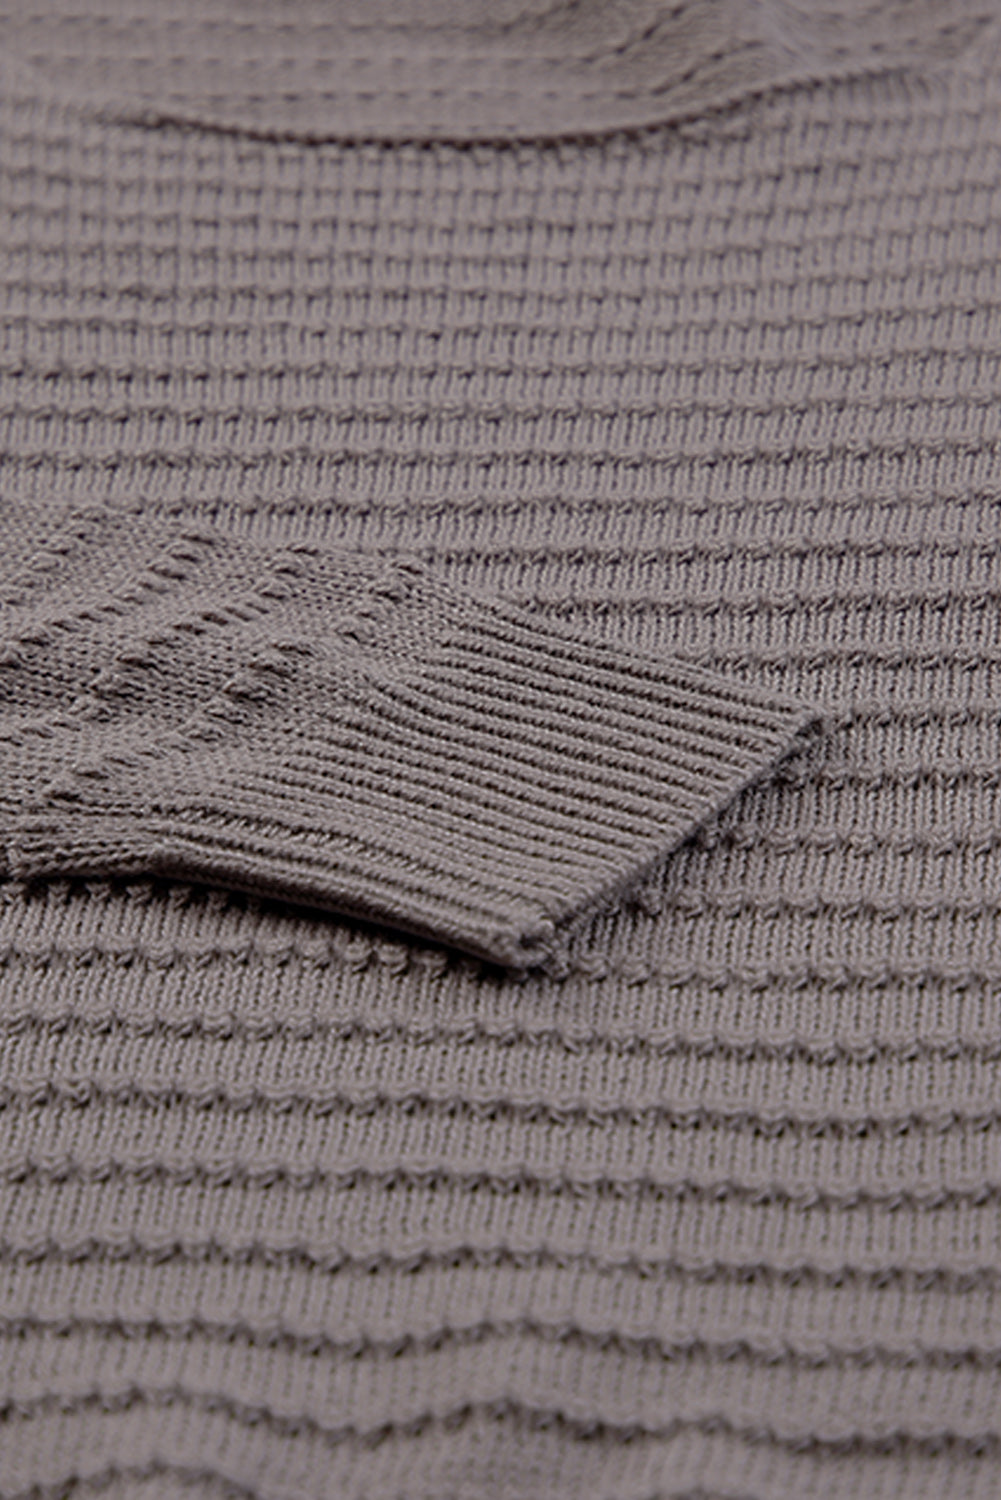 Textured Knit Round Neck Dolman Sleeve Sweater